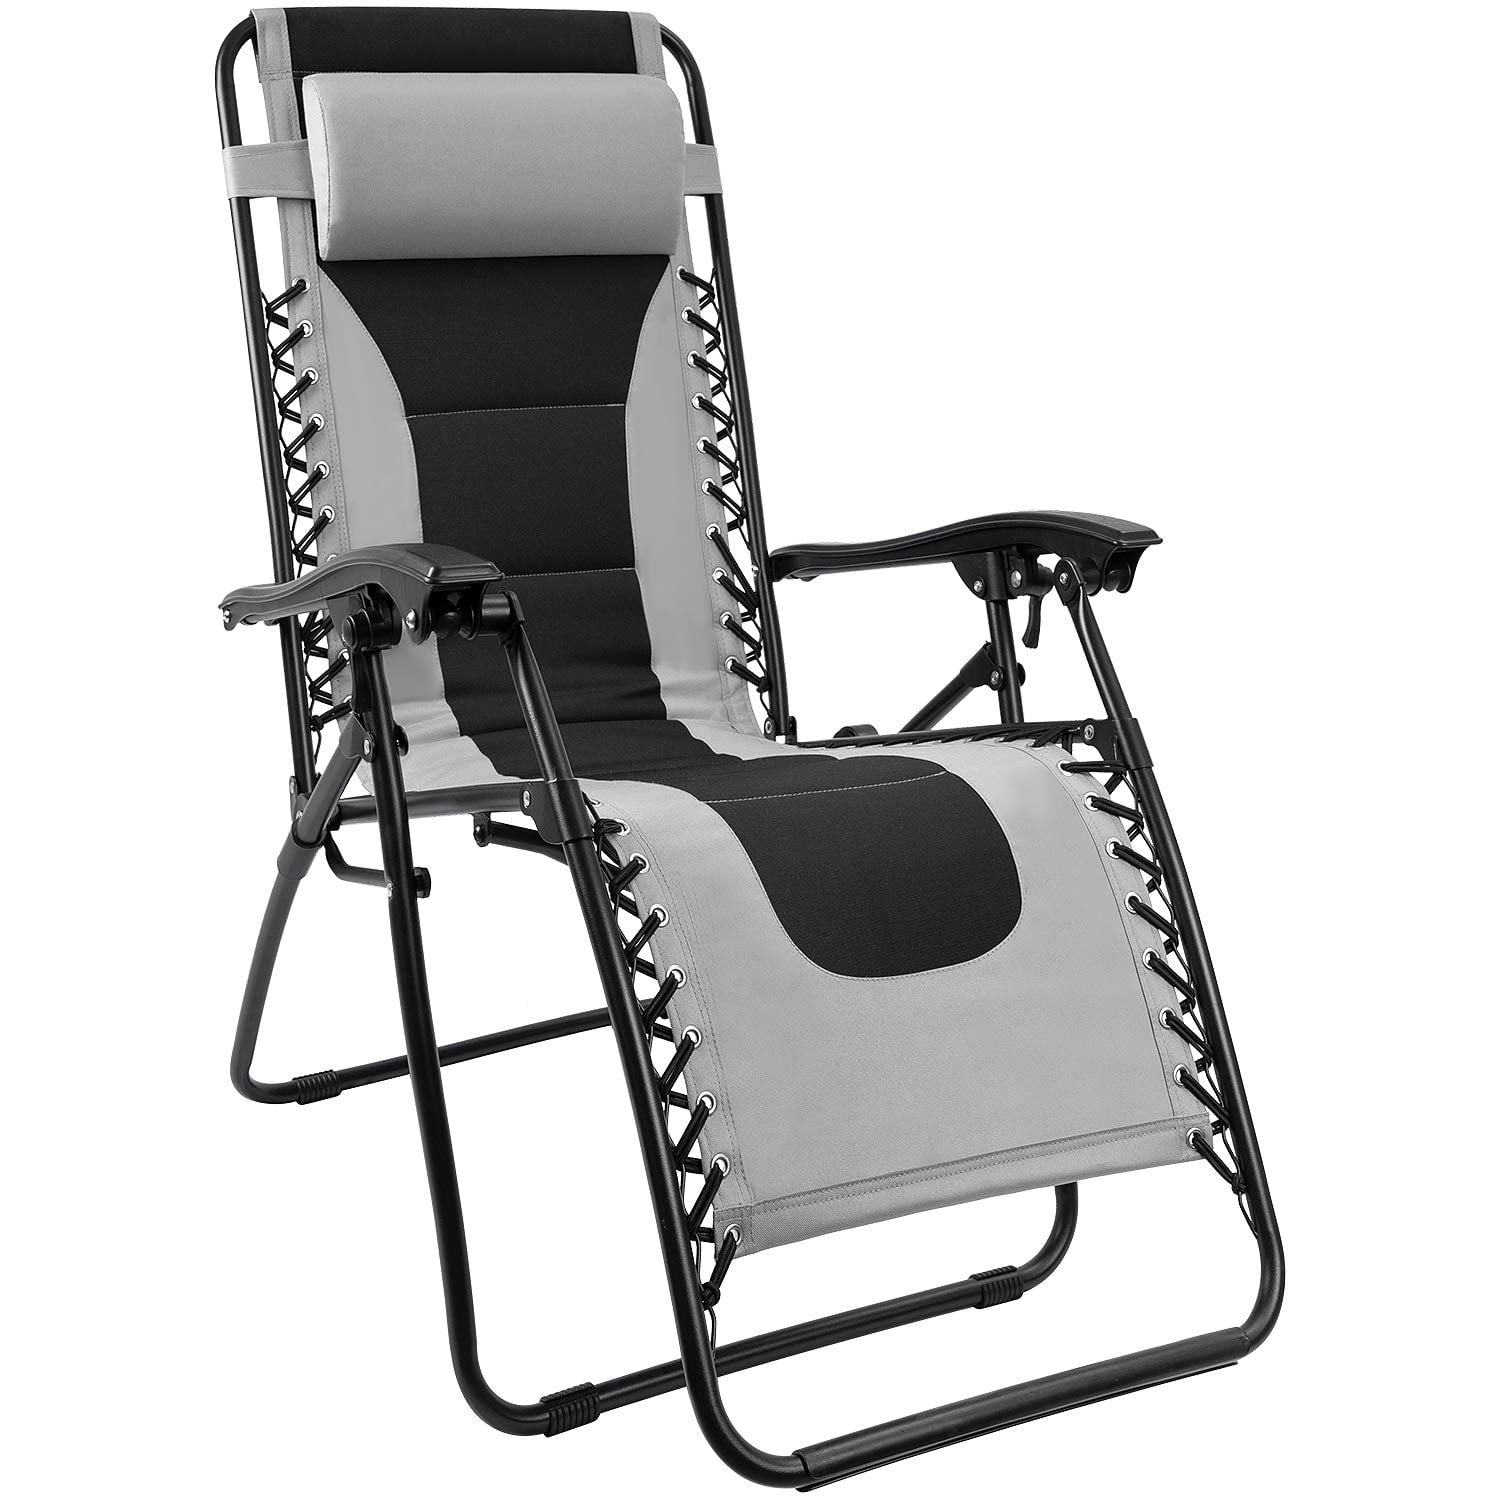 Lacoo Oversized Padded Zero Gravity Chair with Headrest, Grey/Black